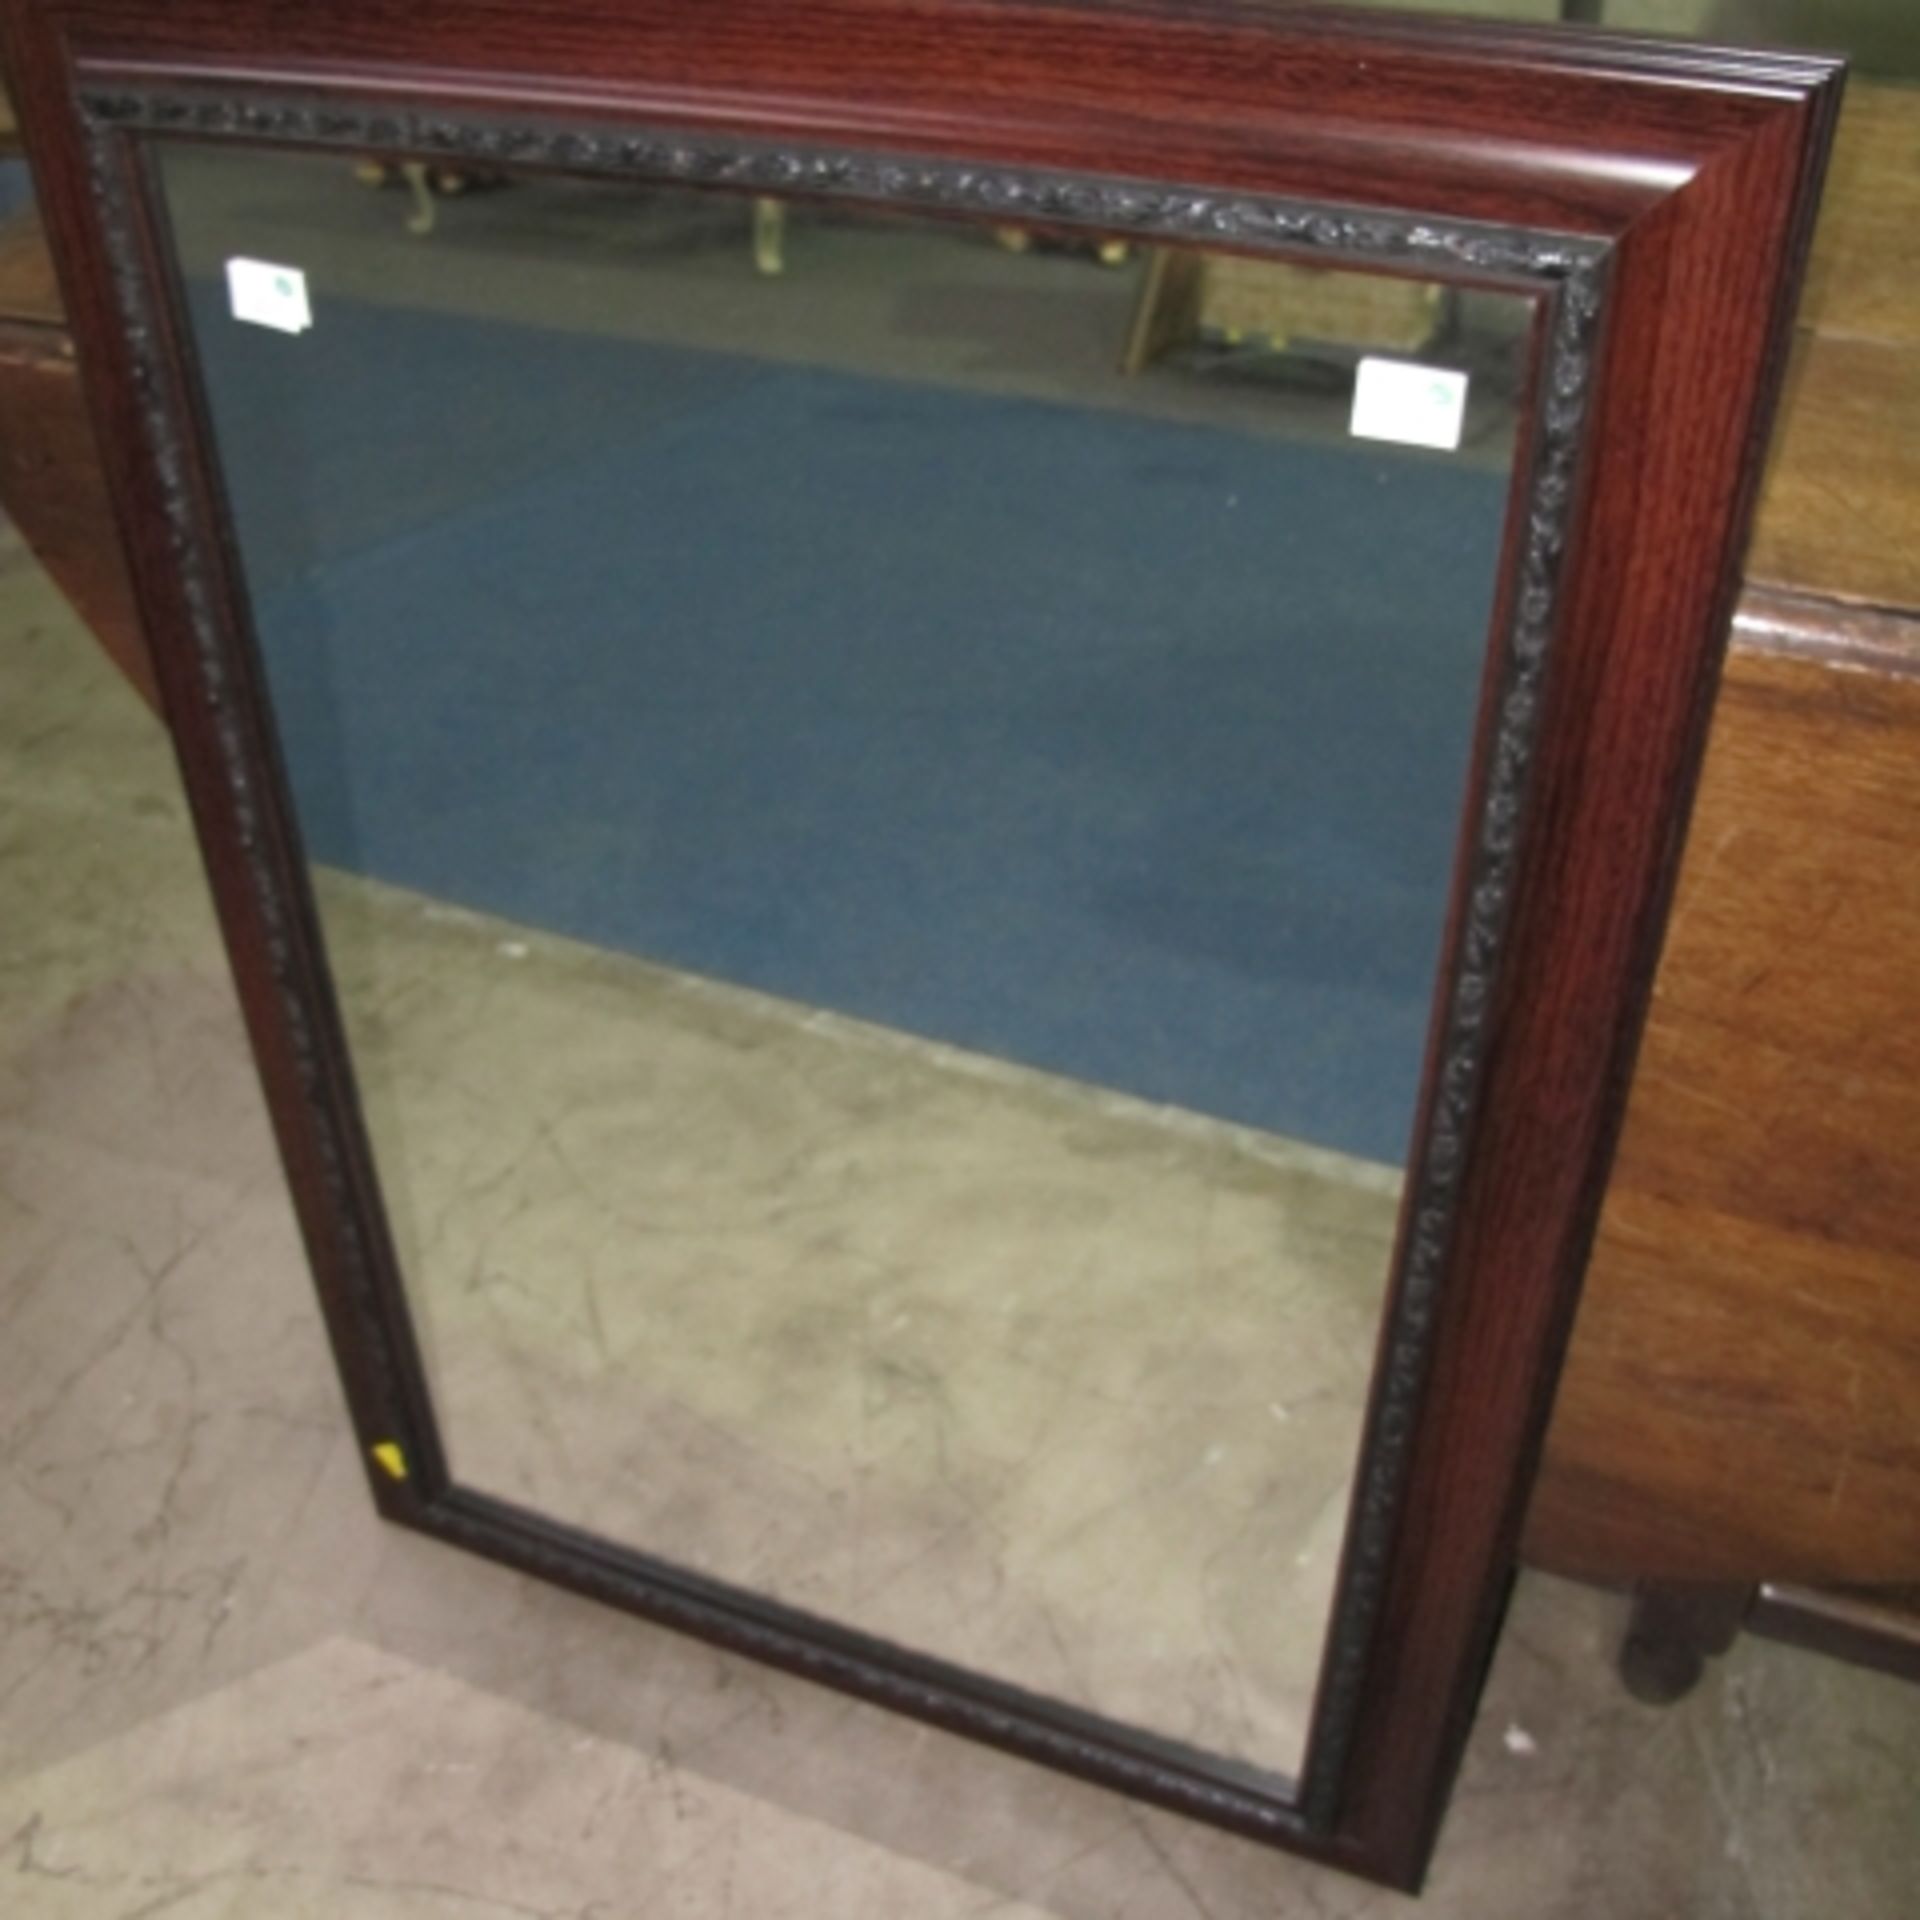 A dark wooden framed plain mirror, 63cm x 89cm (est £20-£40) - Image 2 of 2